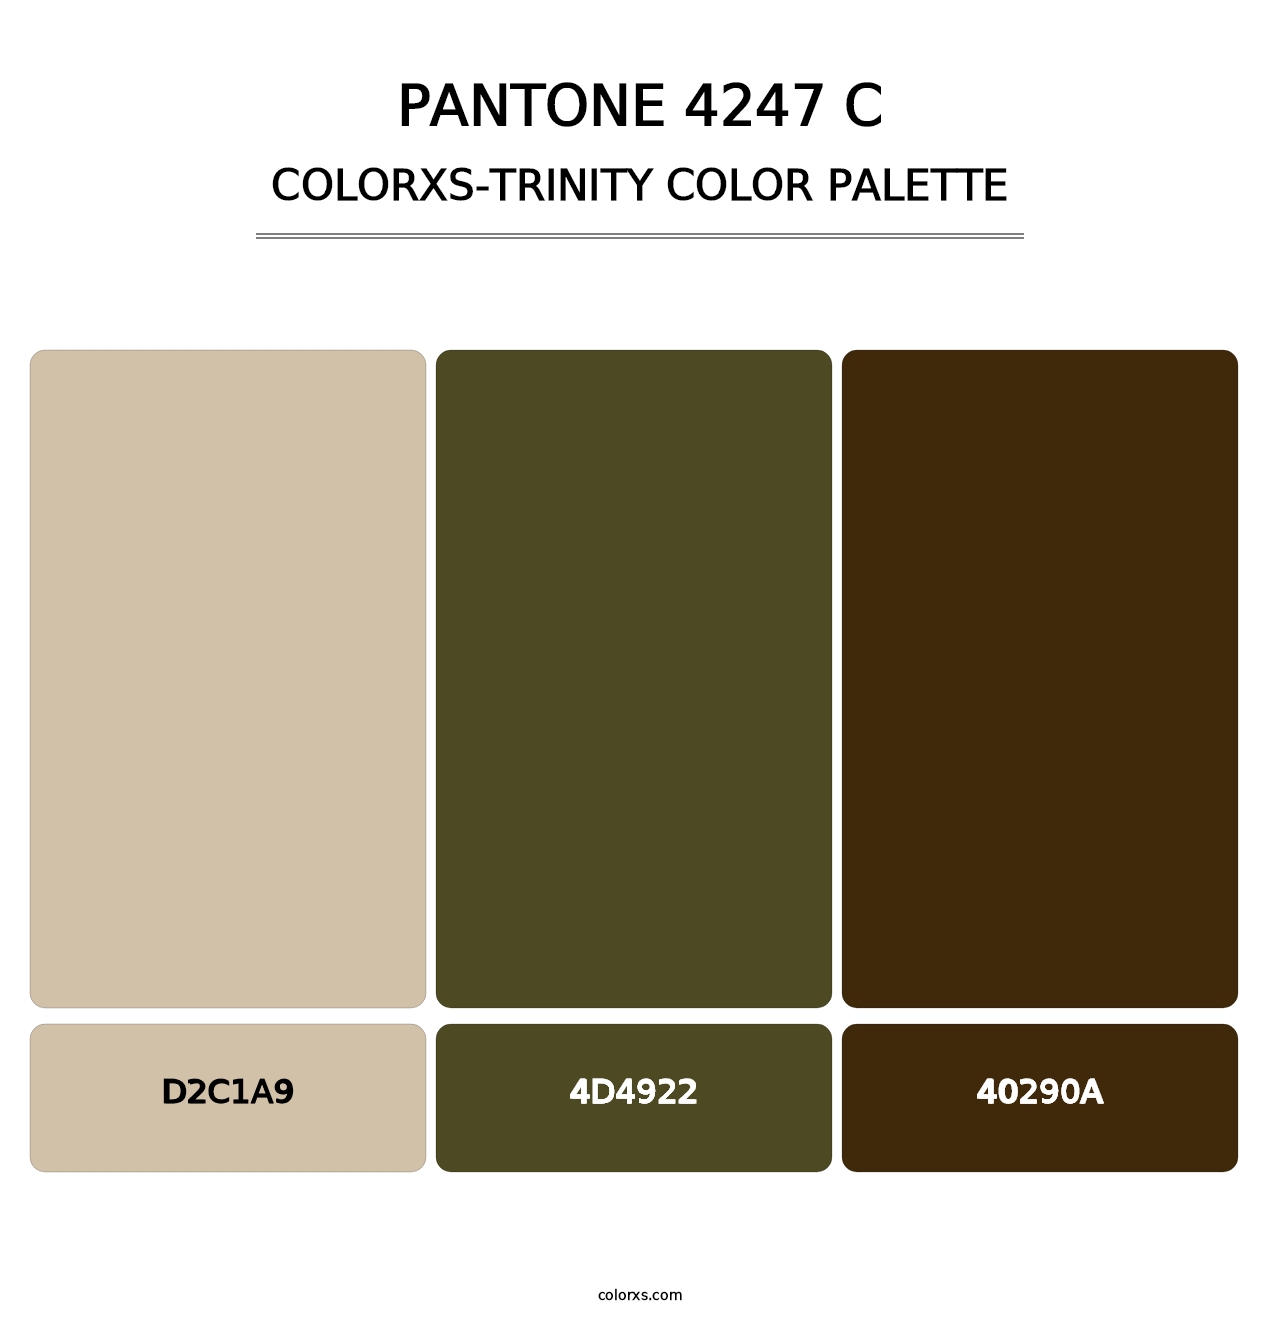 PANTONE 4247 C - Colorxs Trinity Palette